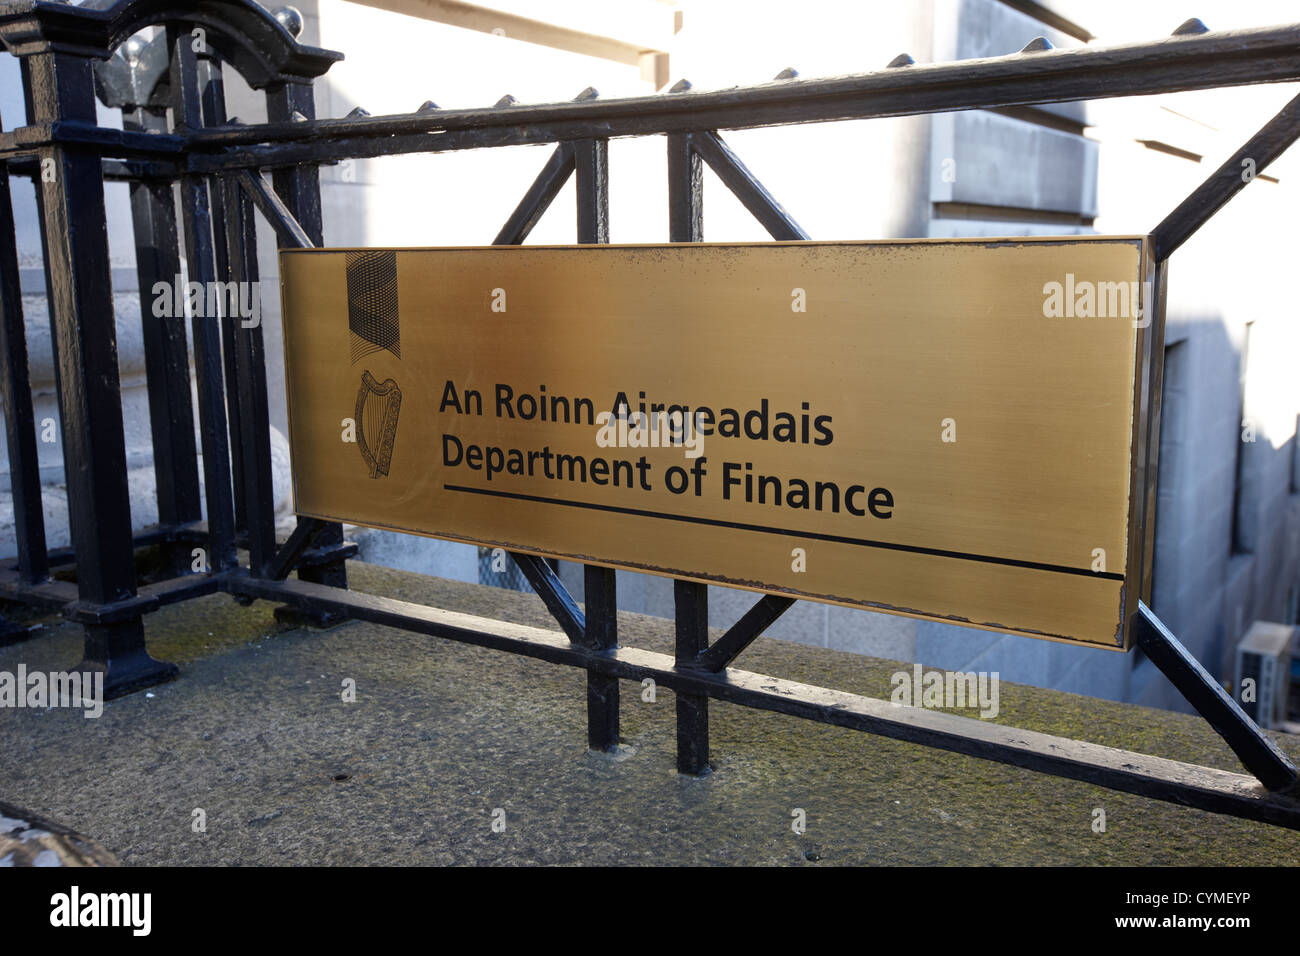 ein Rionn Airgeadais-Departement Finanzen Dublin Irland Stockfoto